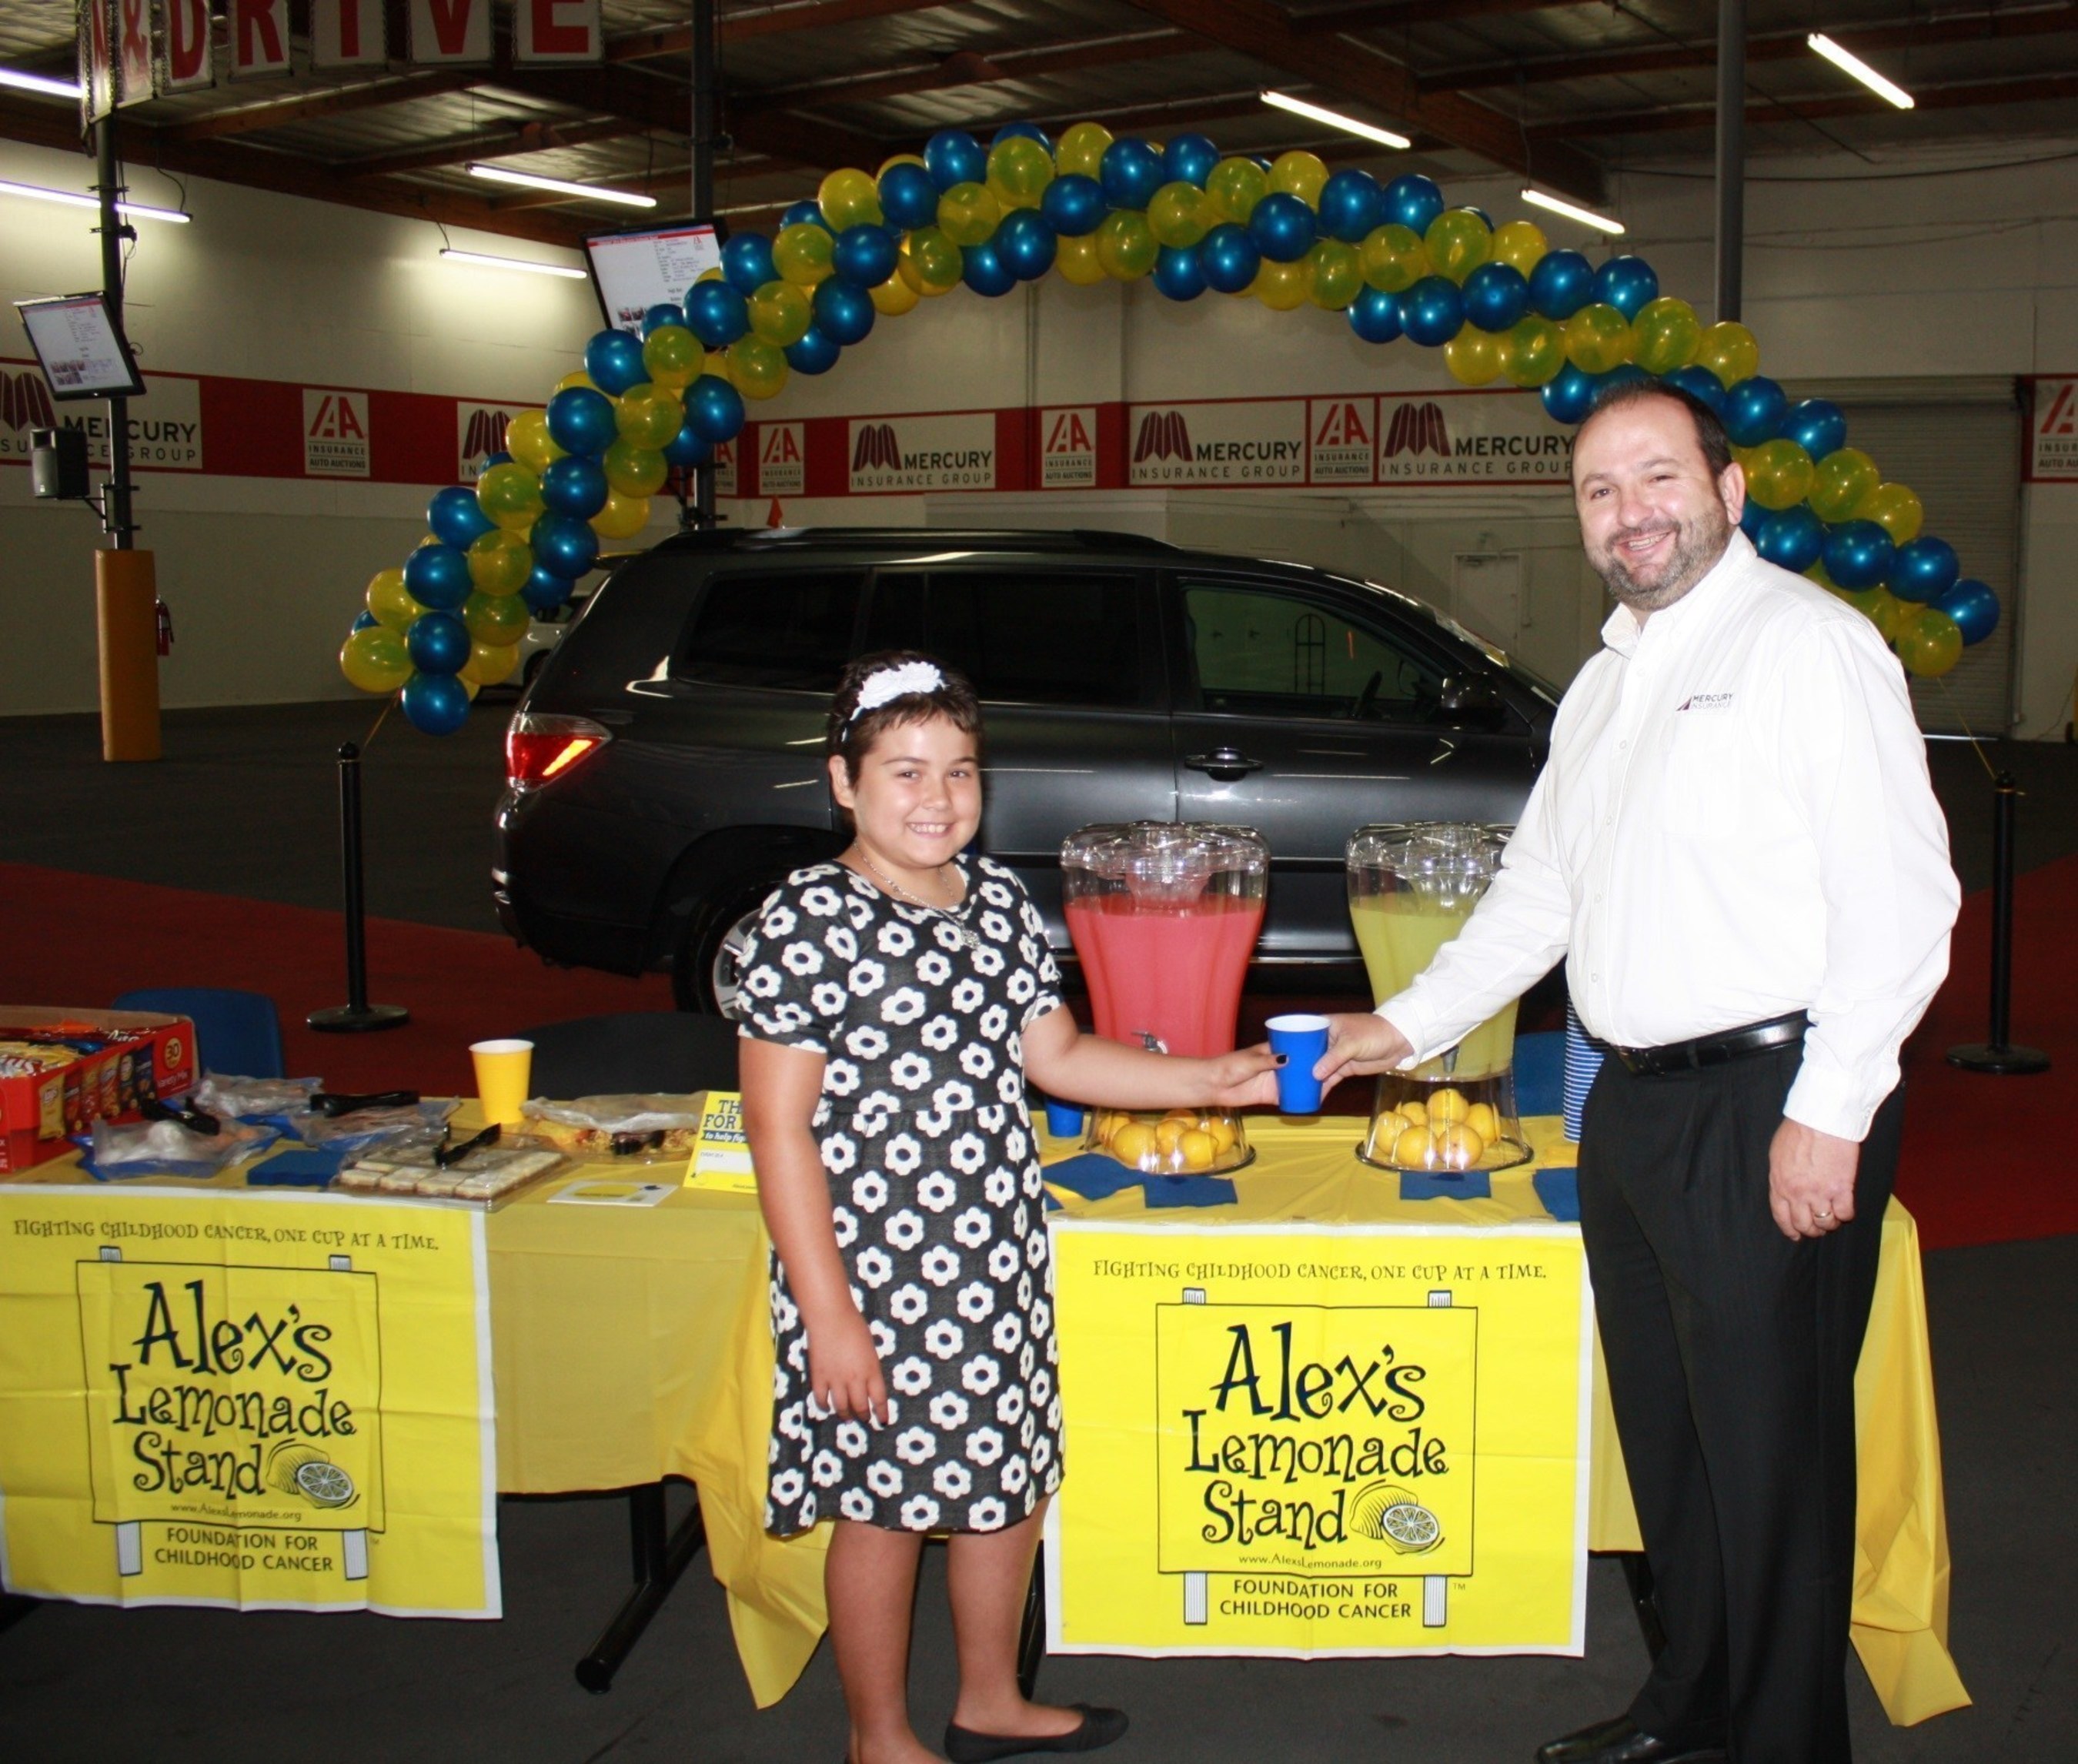 Alex's Lemonade Stand Foundation Hero Karah Casas serves lemonade to Mercury's Jim Bohn at vehicle auction that helped raise $14,700 for childhood cancer research.